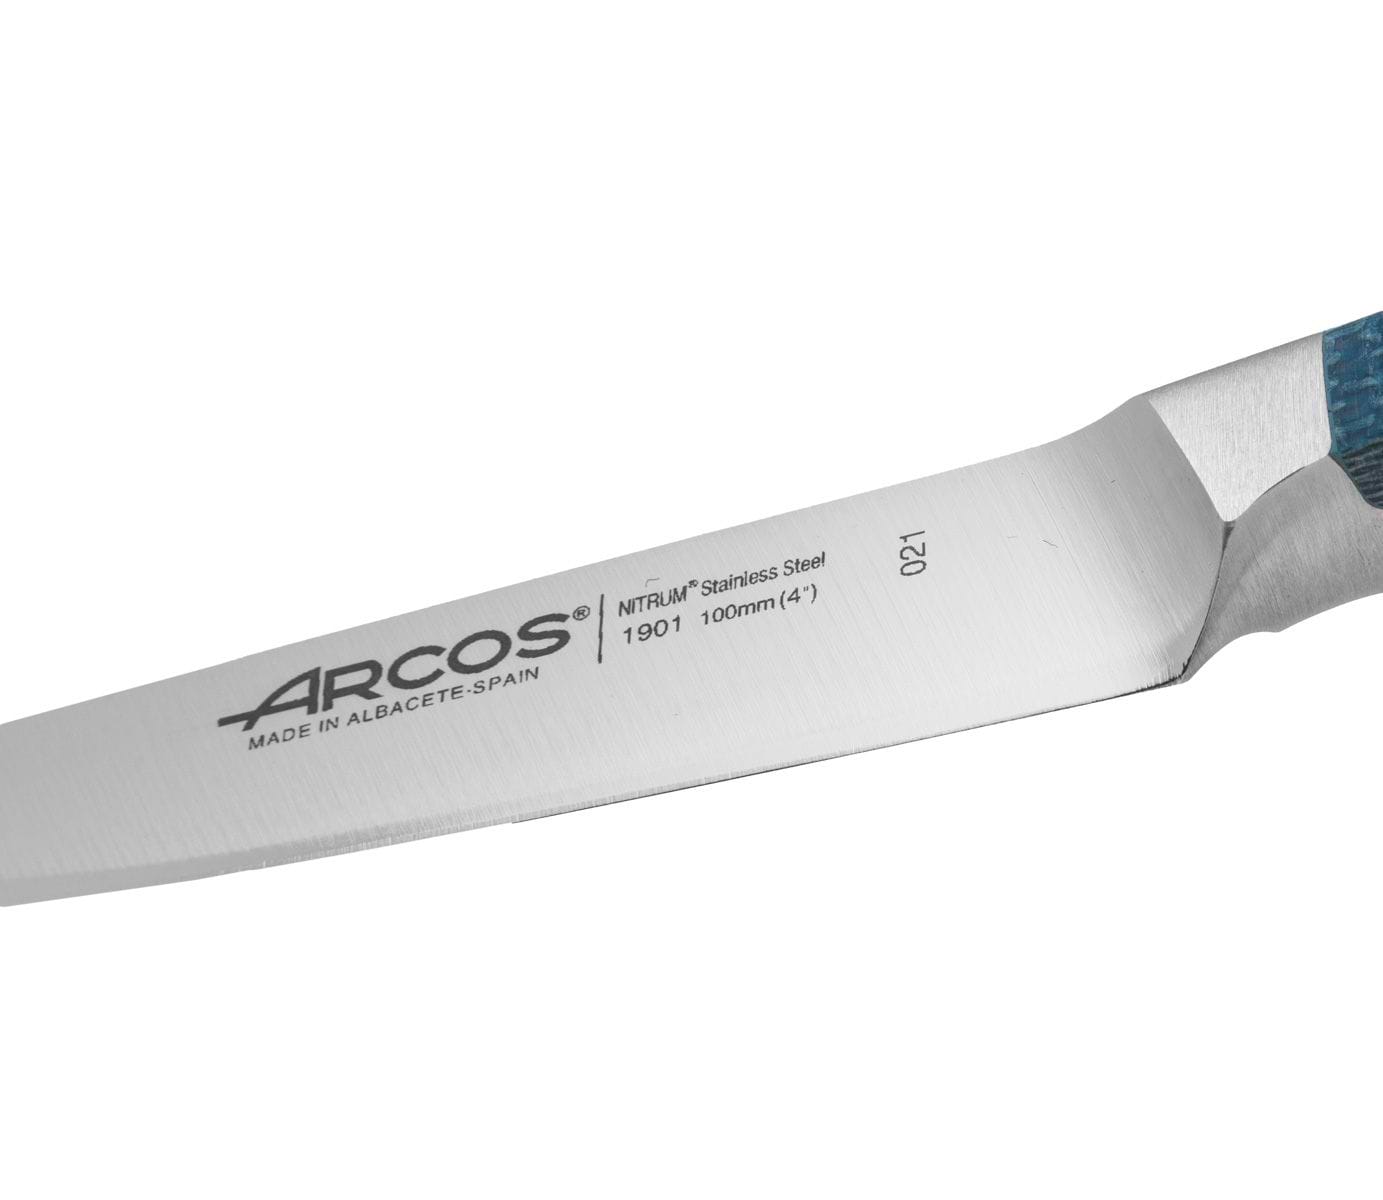 Brooklyn Arcos Lace Knife, Buy Online